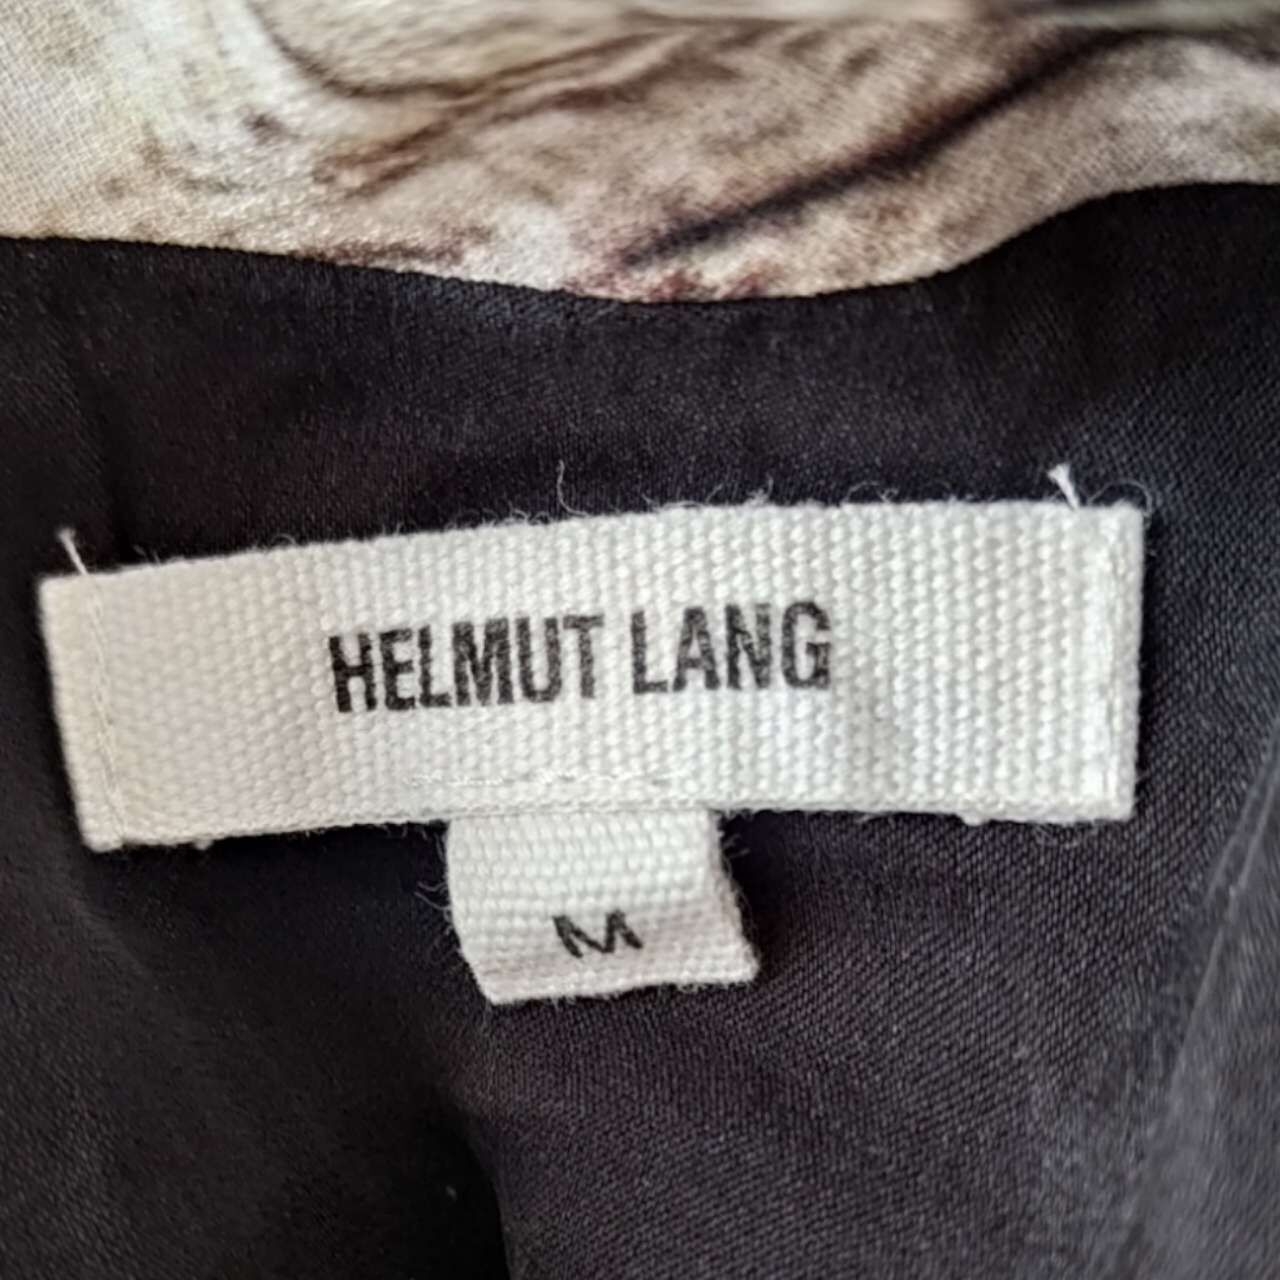 Helmut Lang Multi Blouse